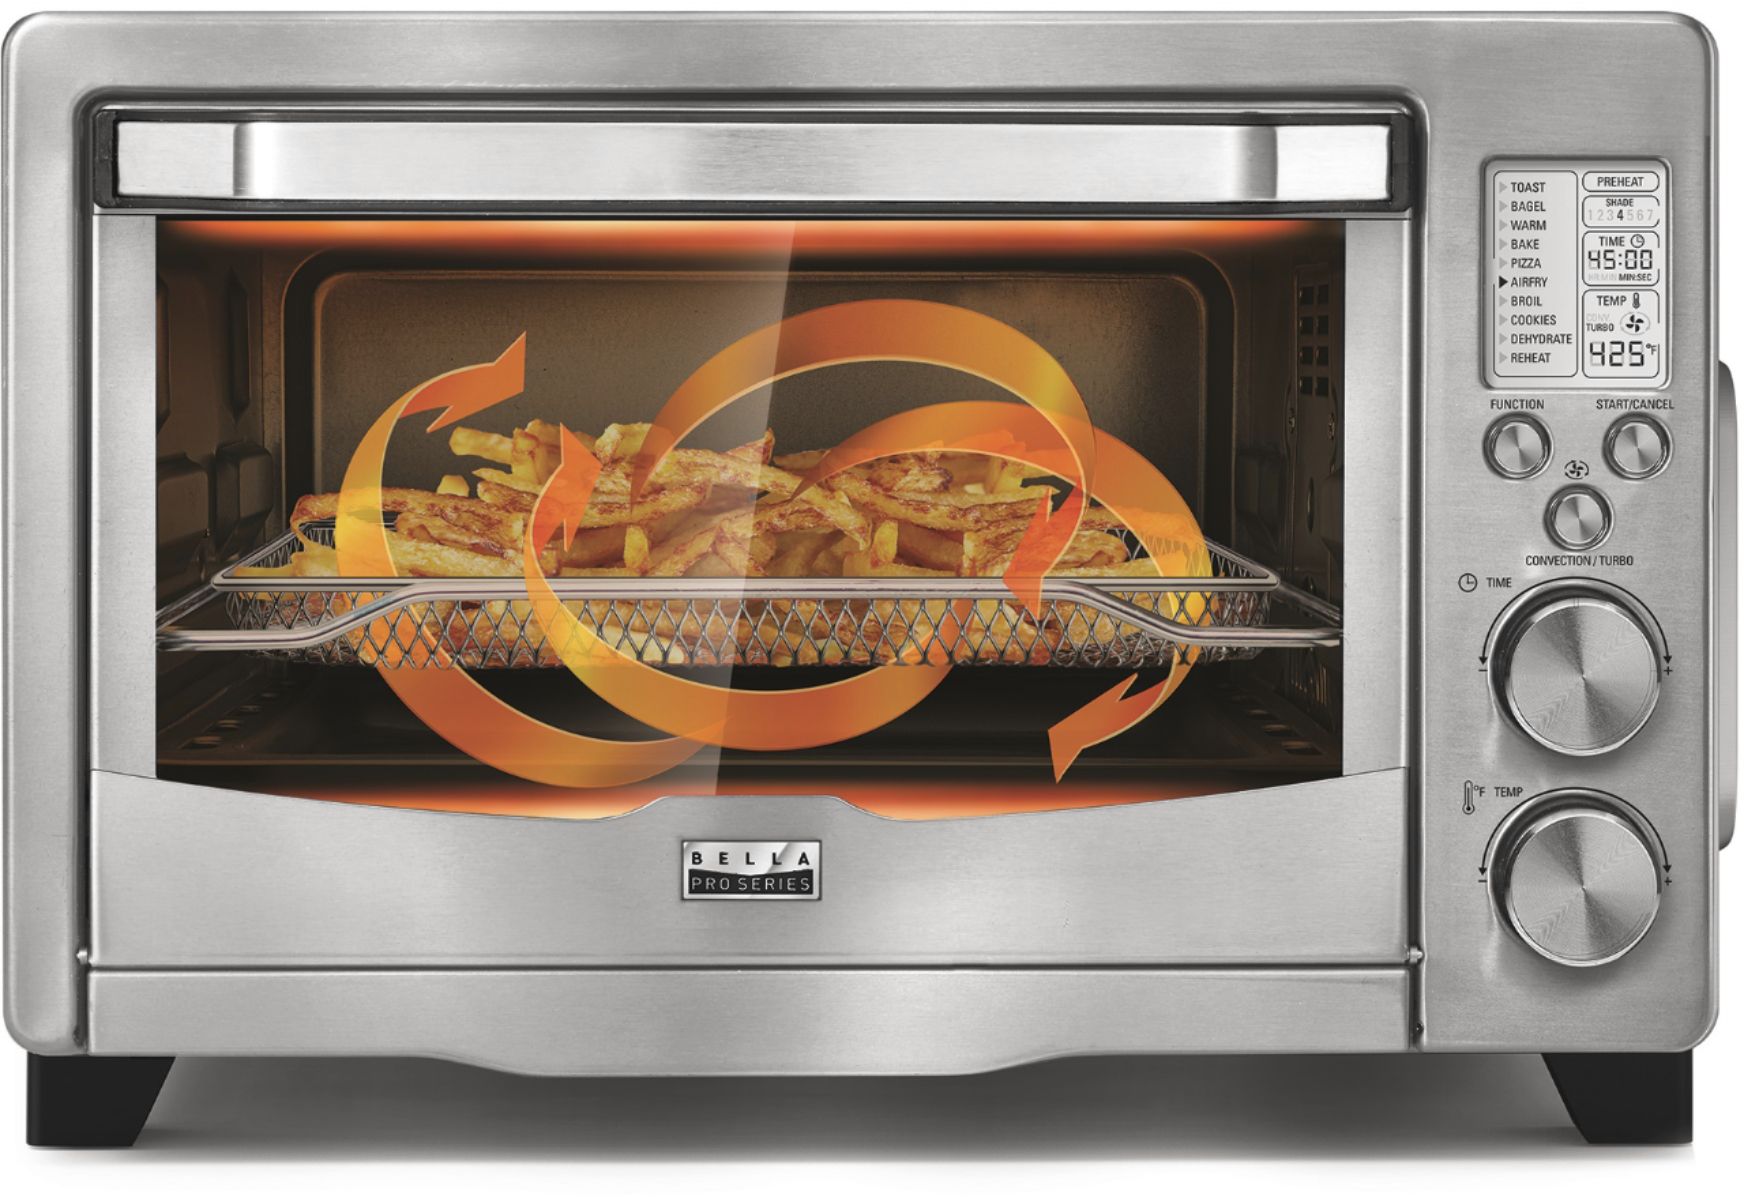 toaster-ovens-stainless-steel-bella-pro-series-6-slice-toaster-oven